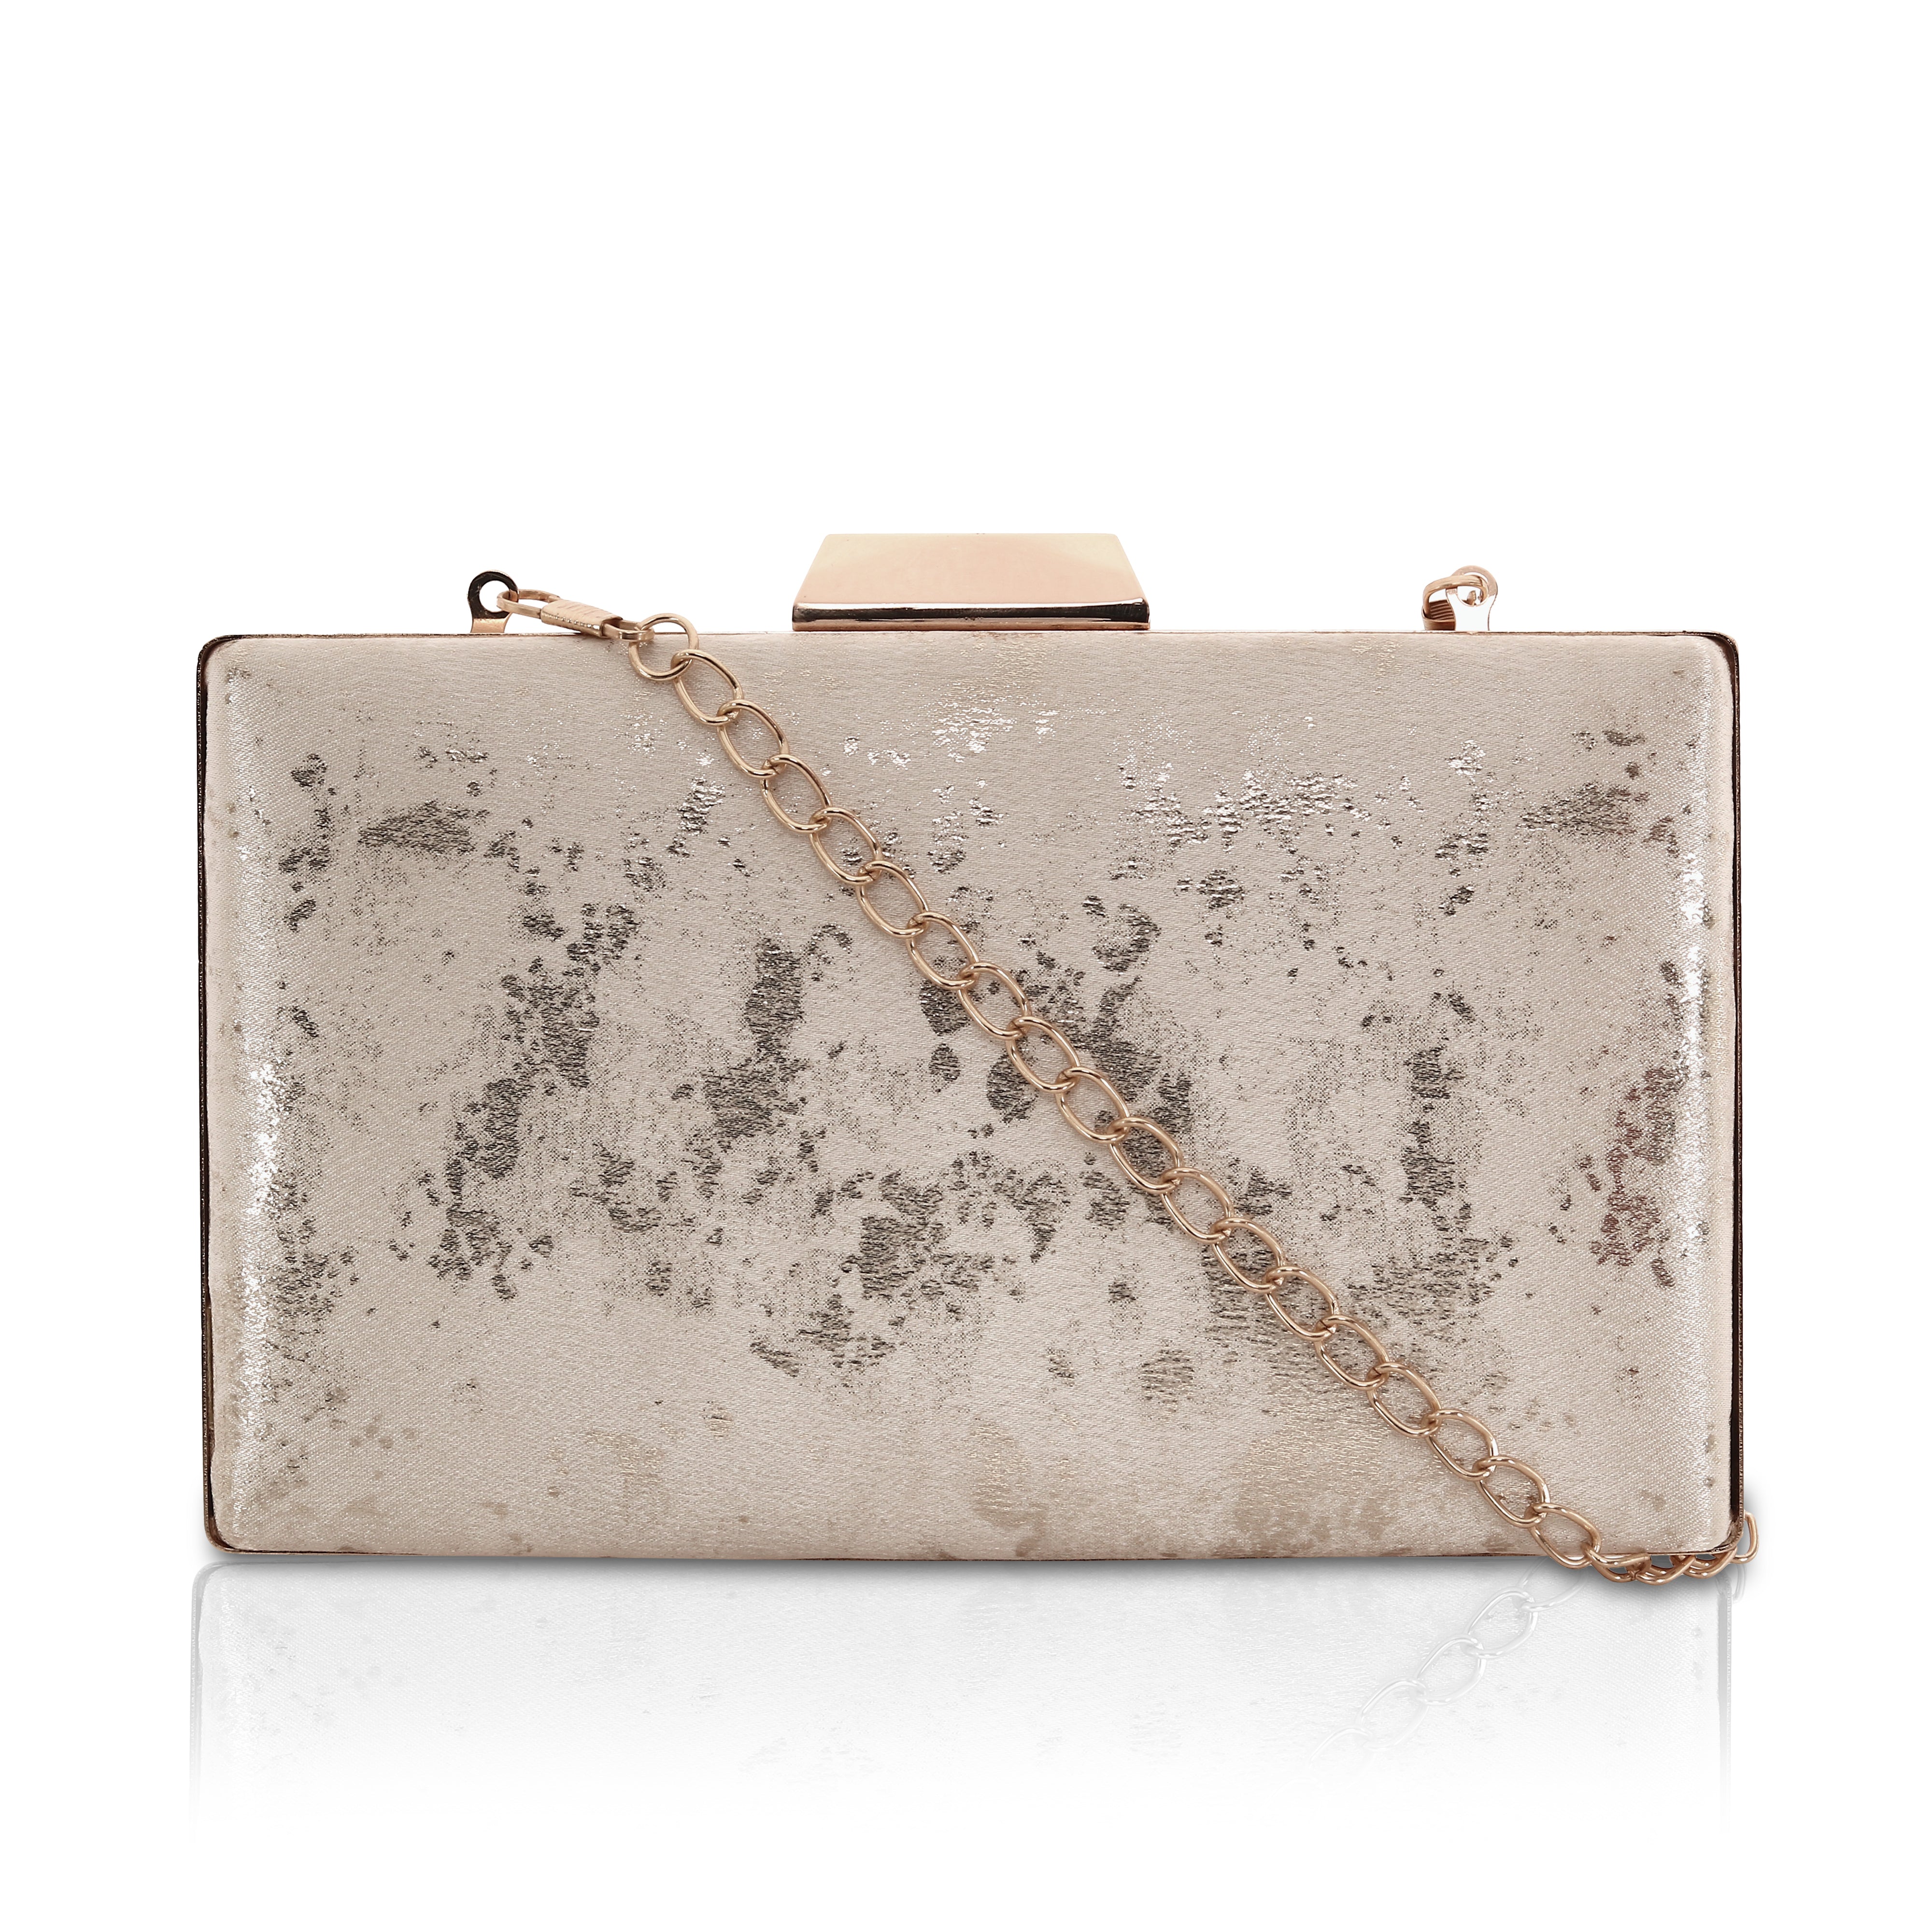 mop mosaic metal stud Evening Bag Handbag Clutch Purse Bag | eBay